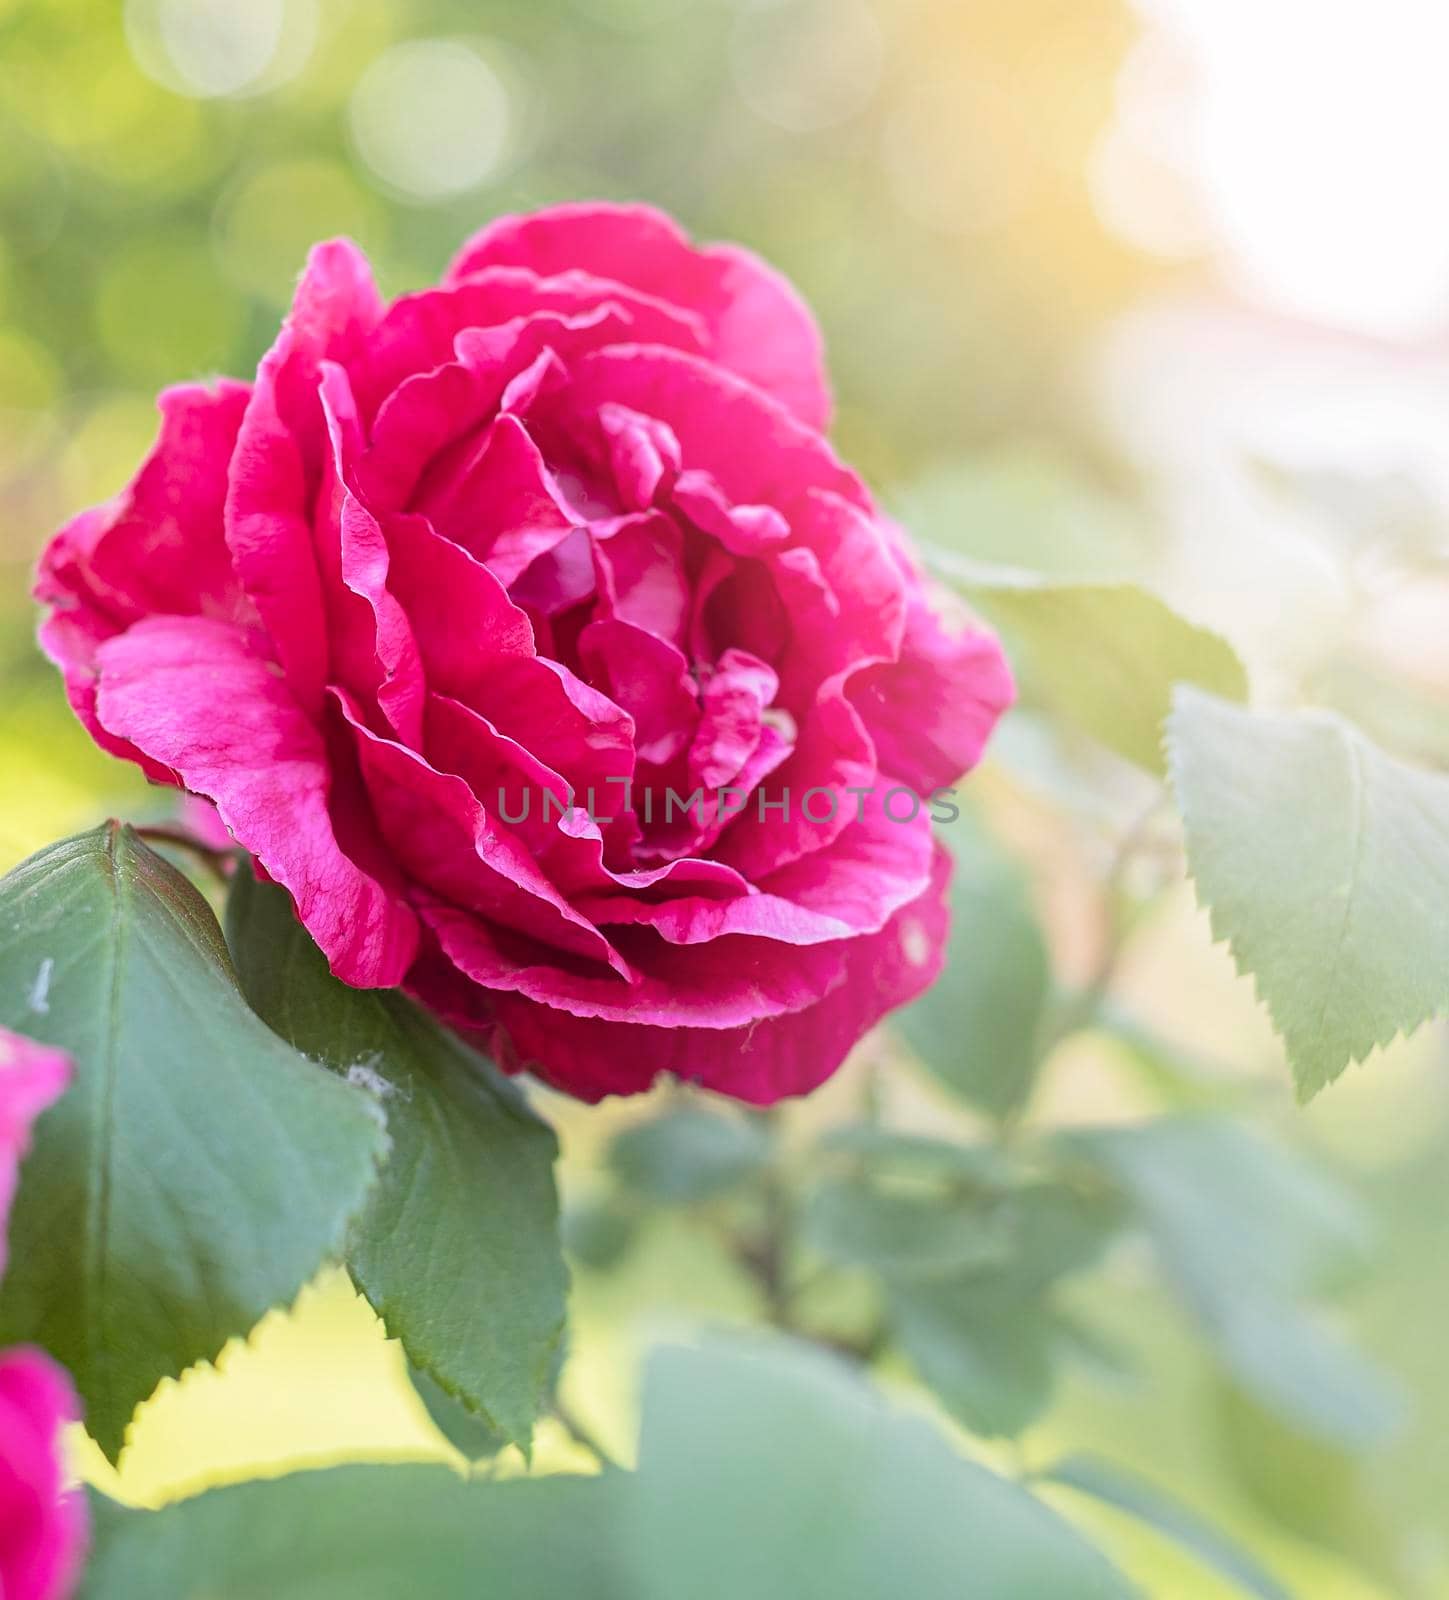 beutiful pink Rose in the garden in the sun by Annavish